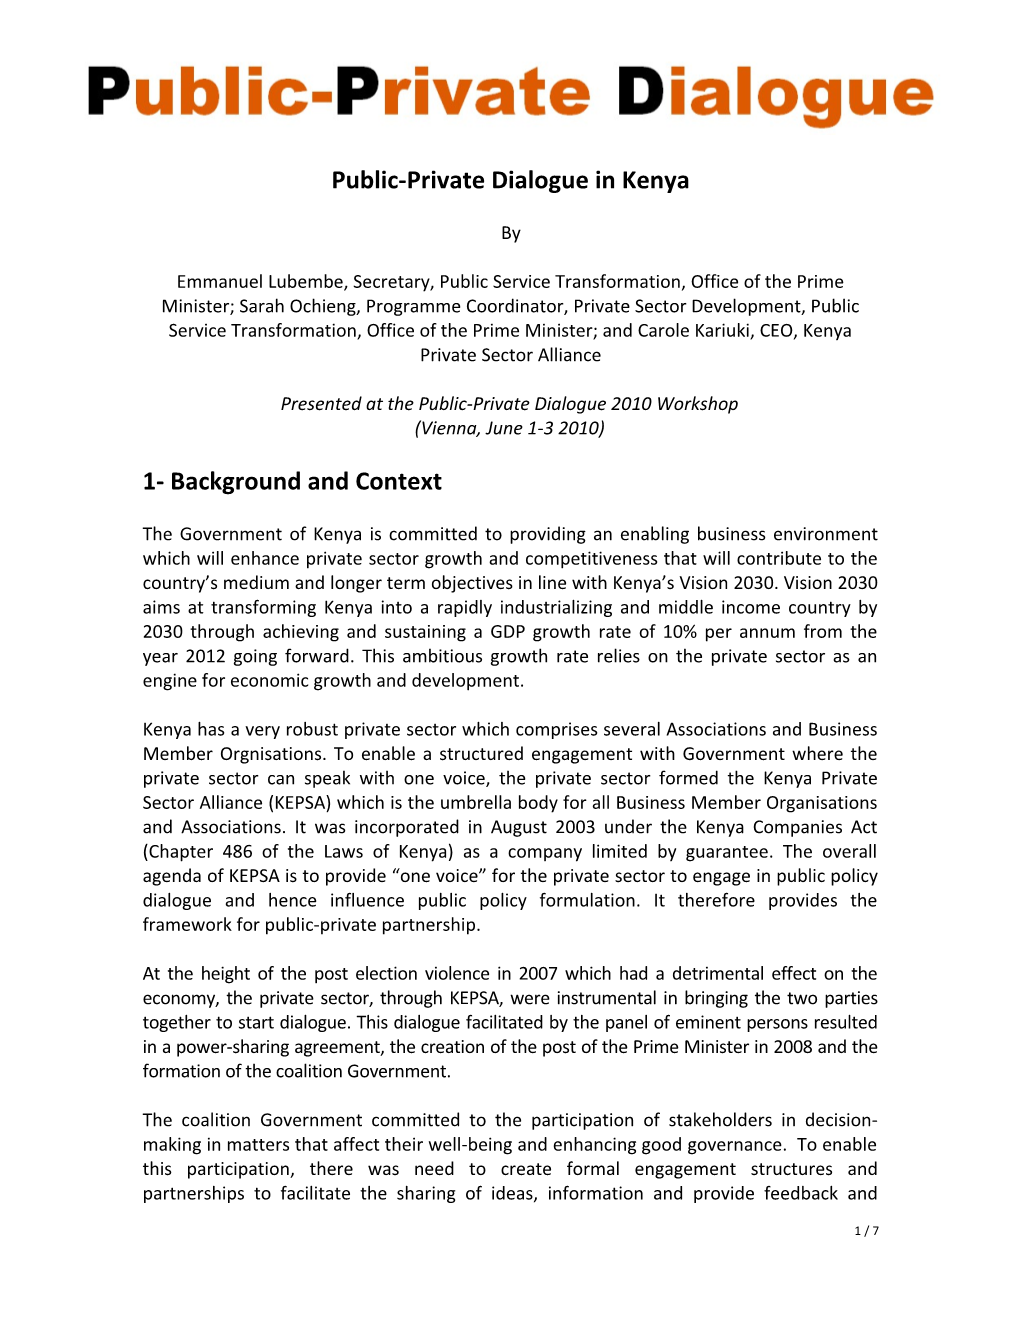 Public-Private Dialogue in Kenya